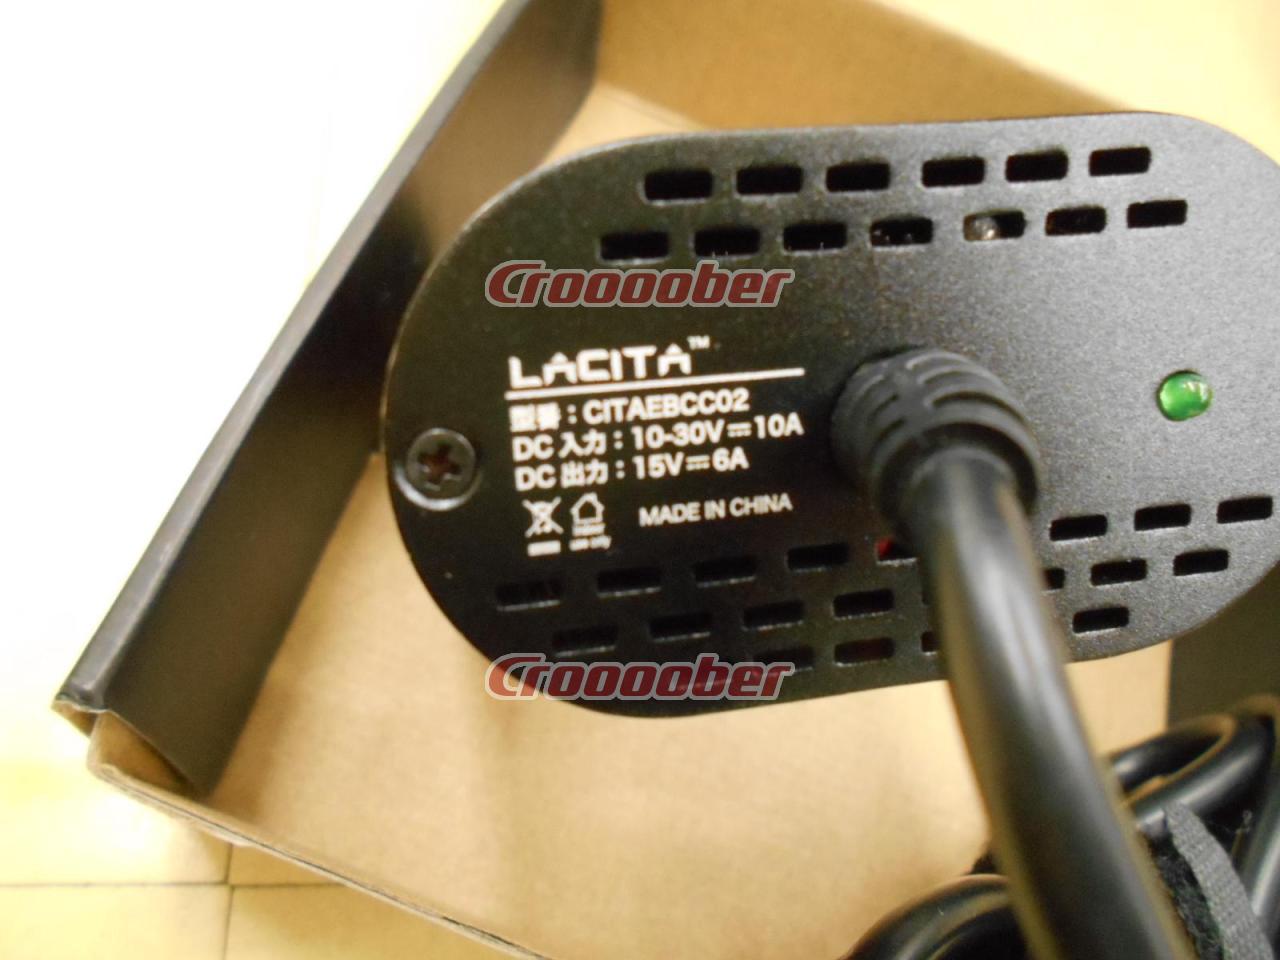 LACITA Portable Power ENERBOX CITAEB-01 | Other Parts | Croooober